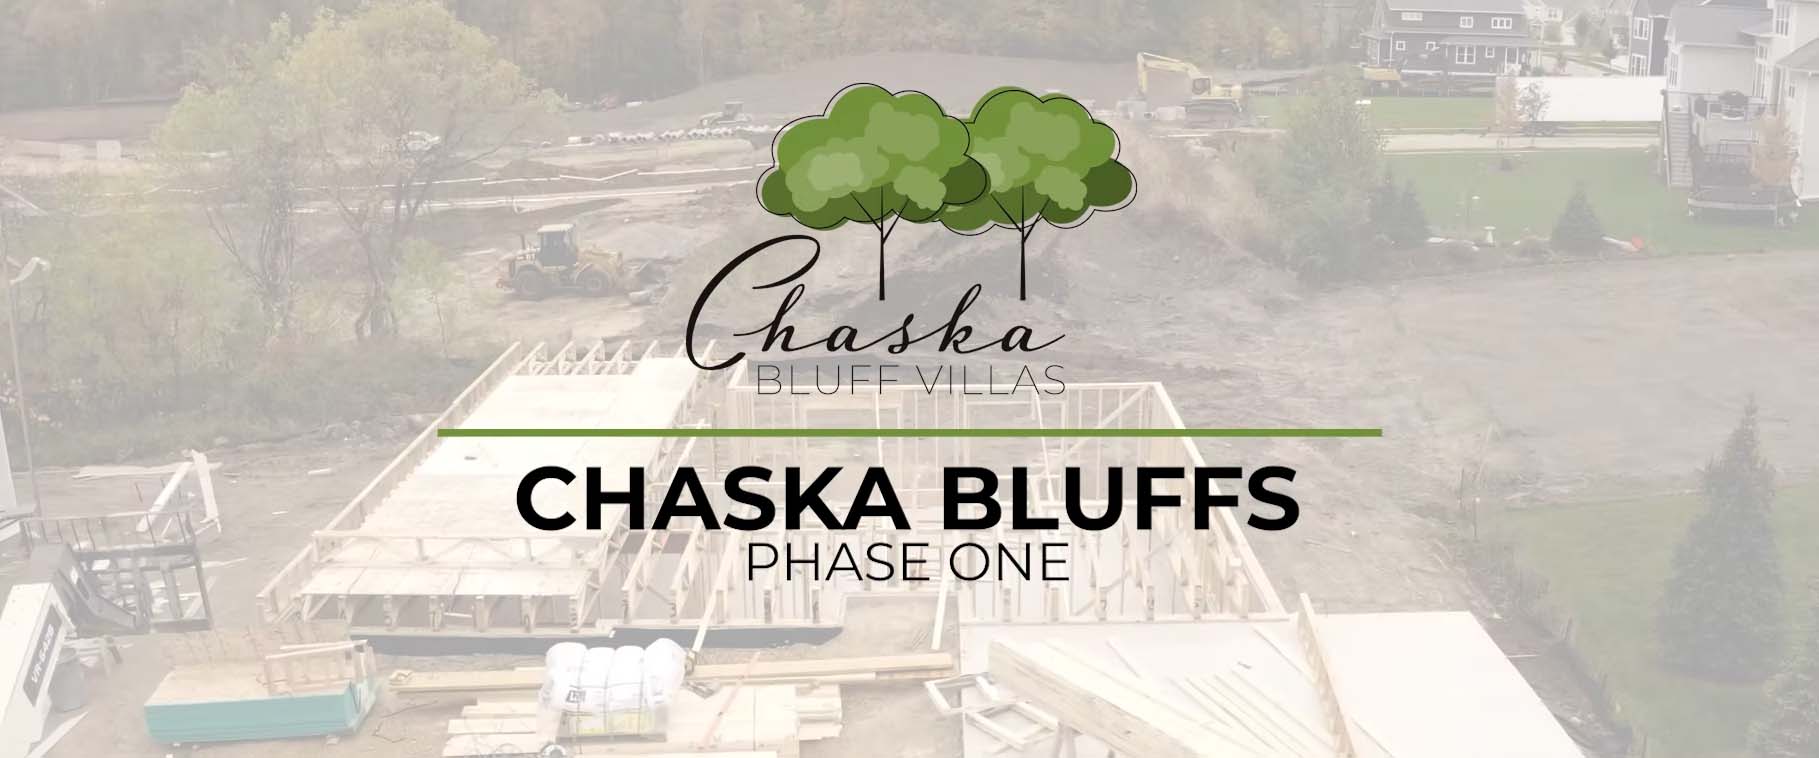 Chaska Bluffs Phase 1